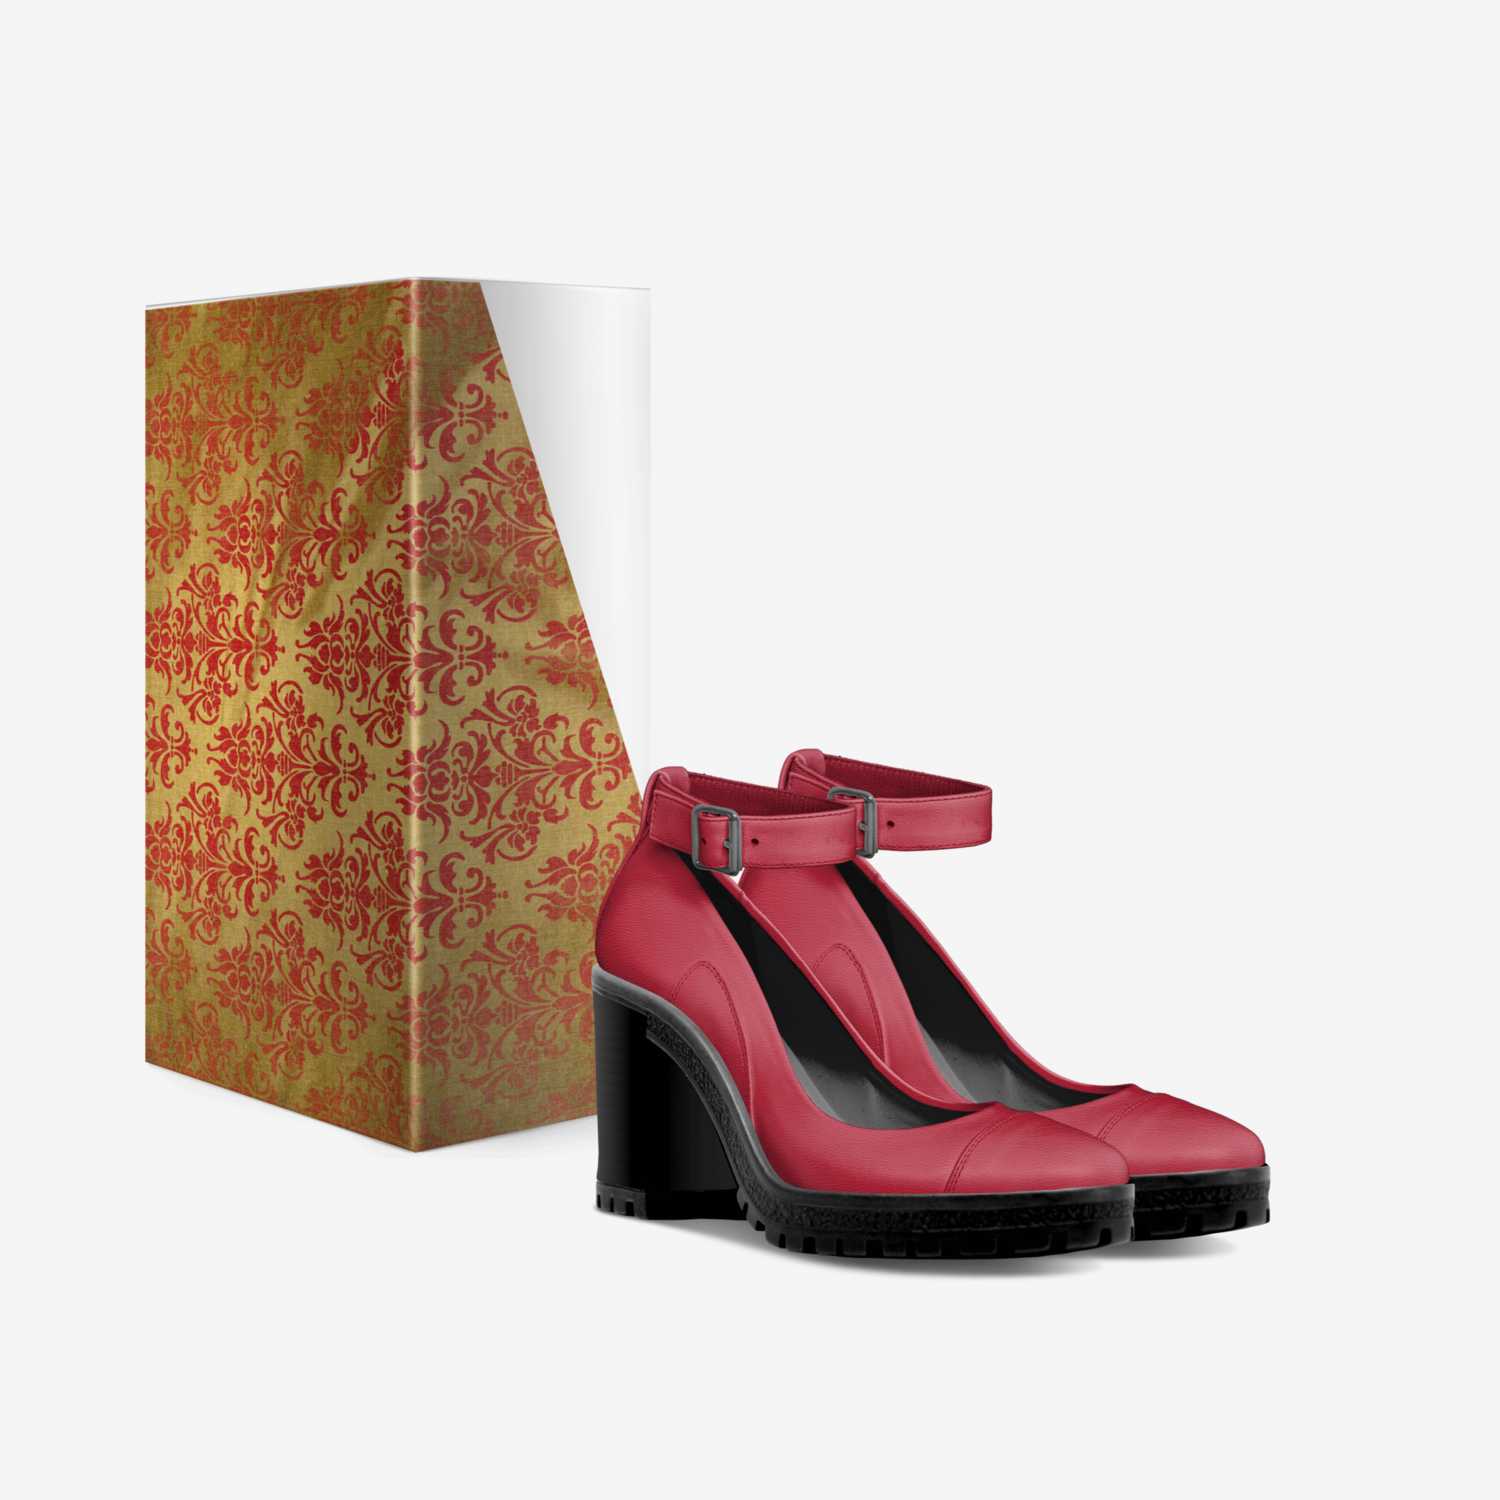 Romelos custom made in Italy shoes by Romeleo Rincon | Box view